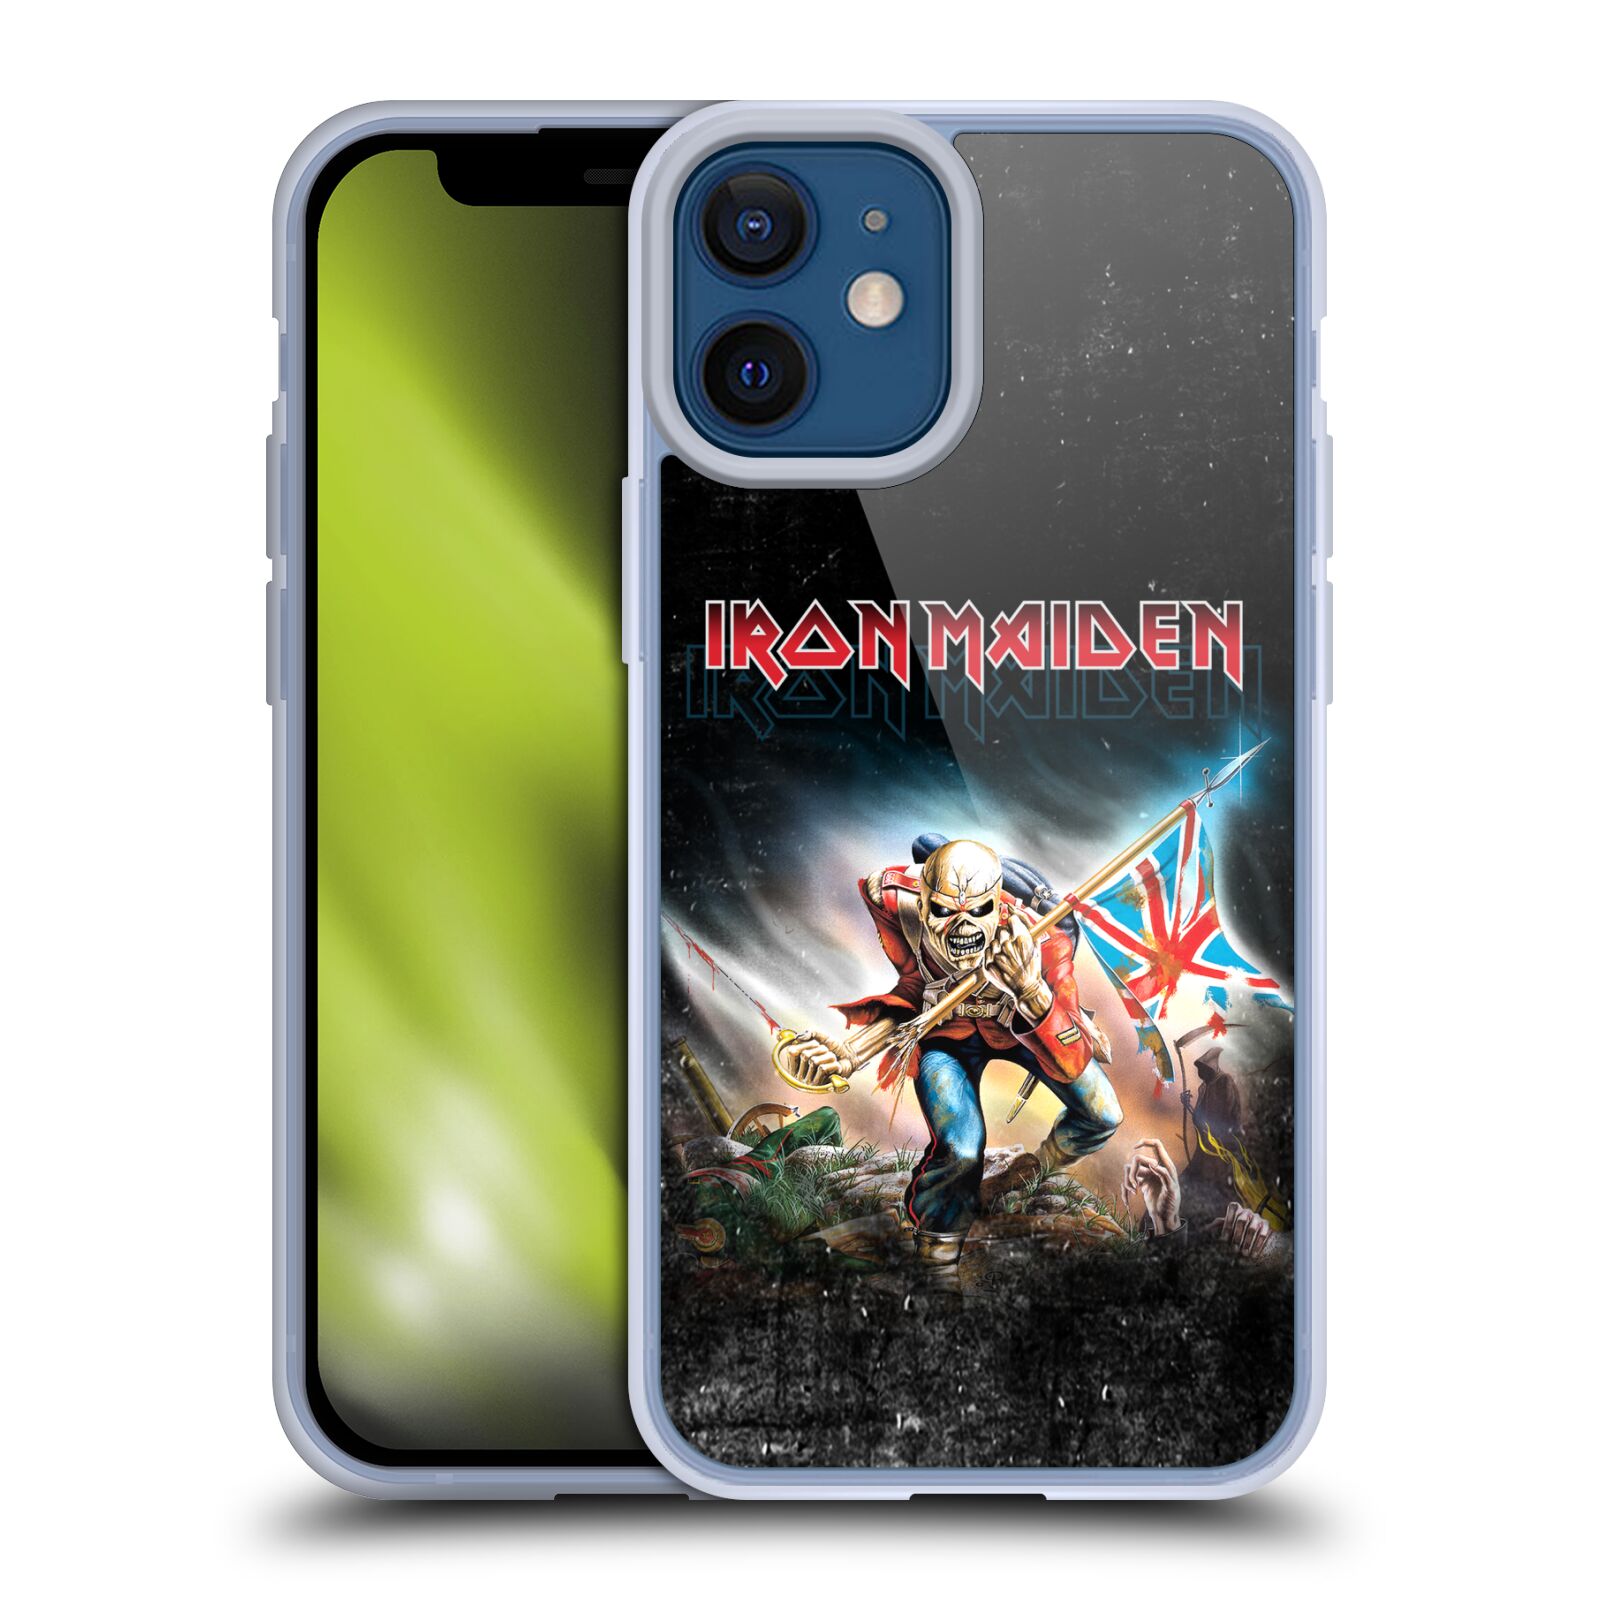 Silikonové pouzdro na mobil Apple iPhone 12 Mini - Head Case - Iron Maiden - Trooper 2016 (Silikonový kryt, obal, pouzdro na mobilní telefon Apple iPhone 12 Mini (5,4") s motivem Iron Maiden - Trooper 2016)